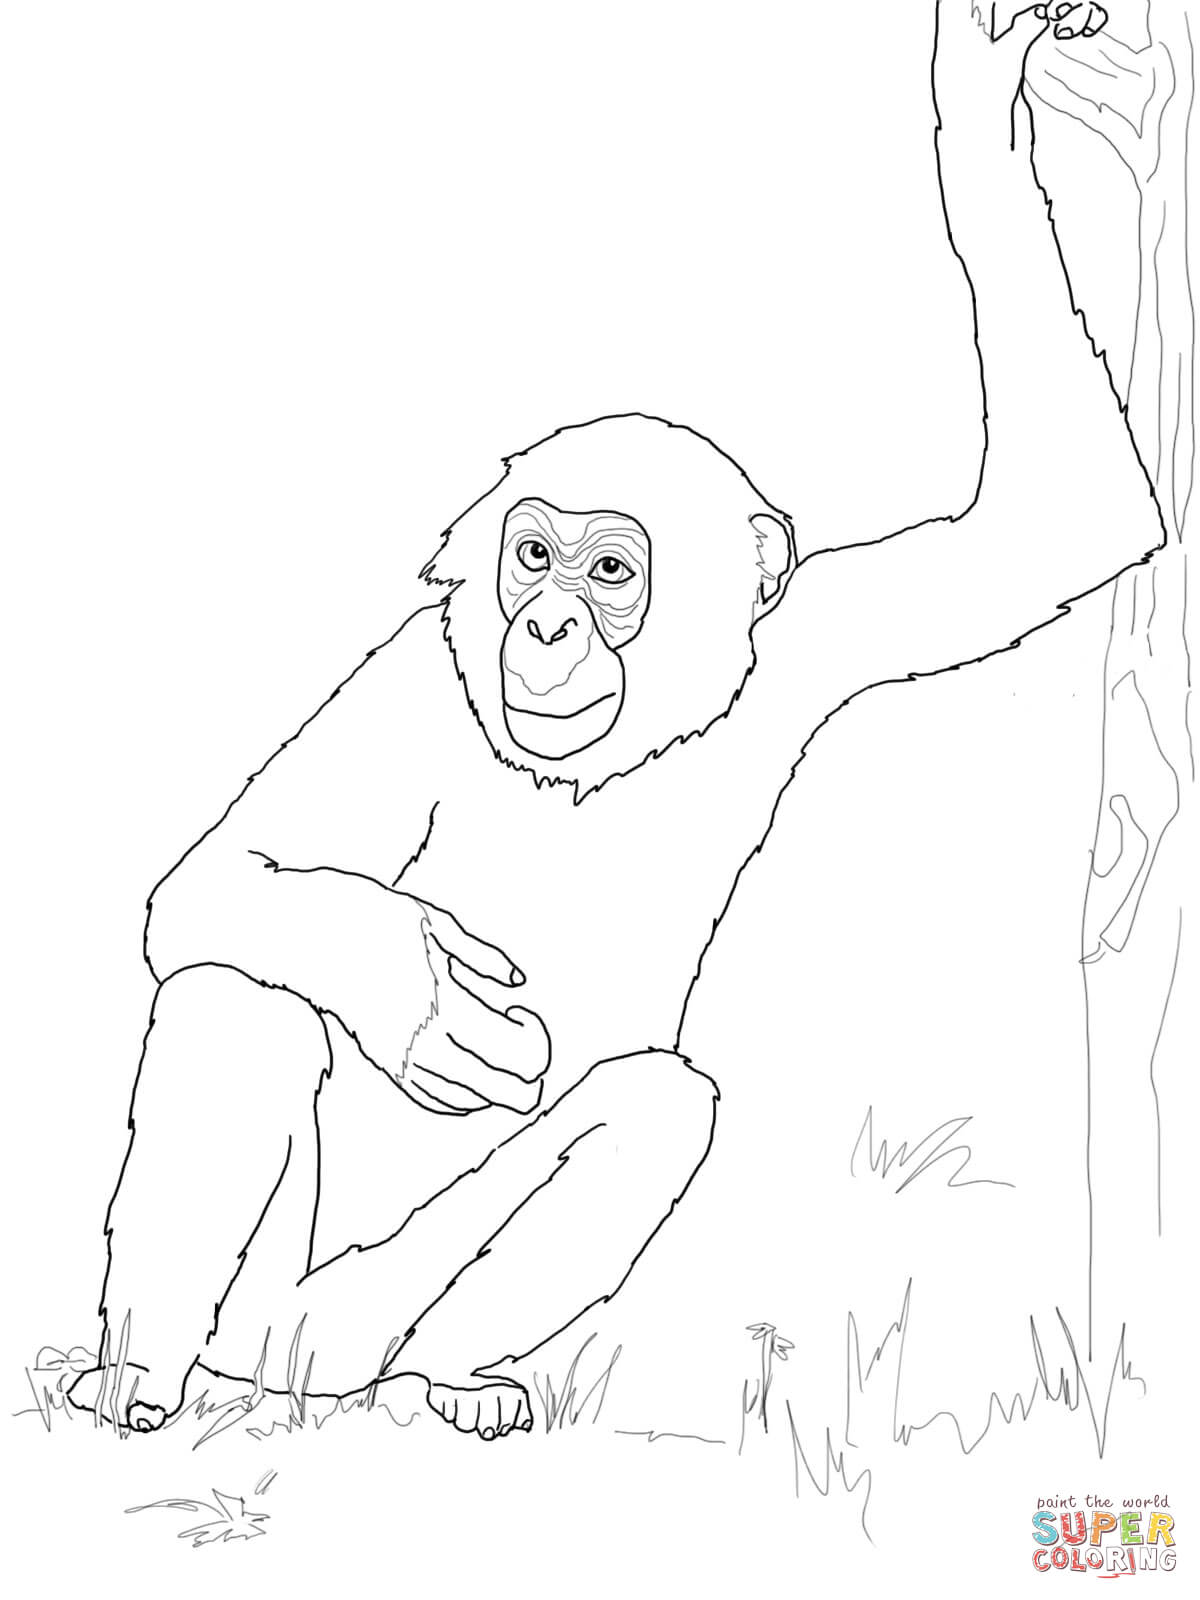 Bonobo Chimpanzee coloring page.